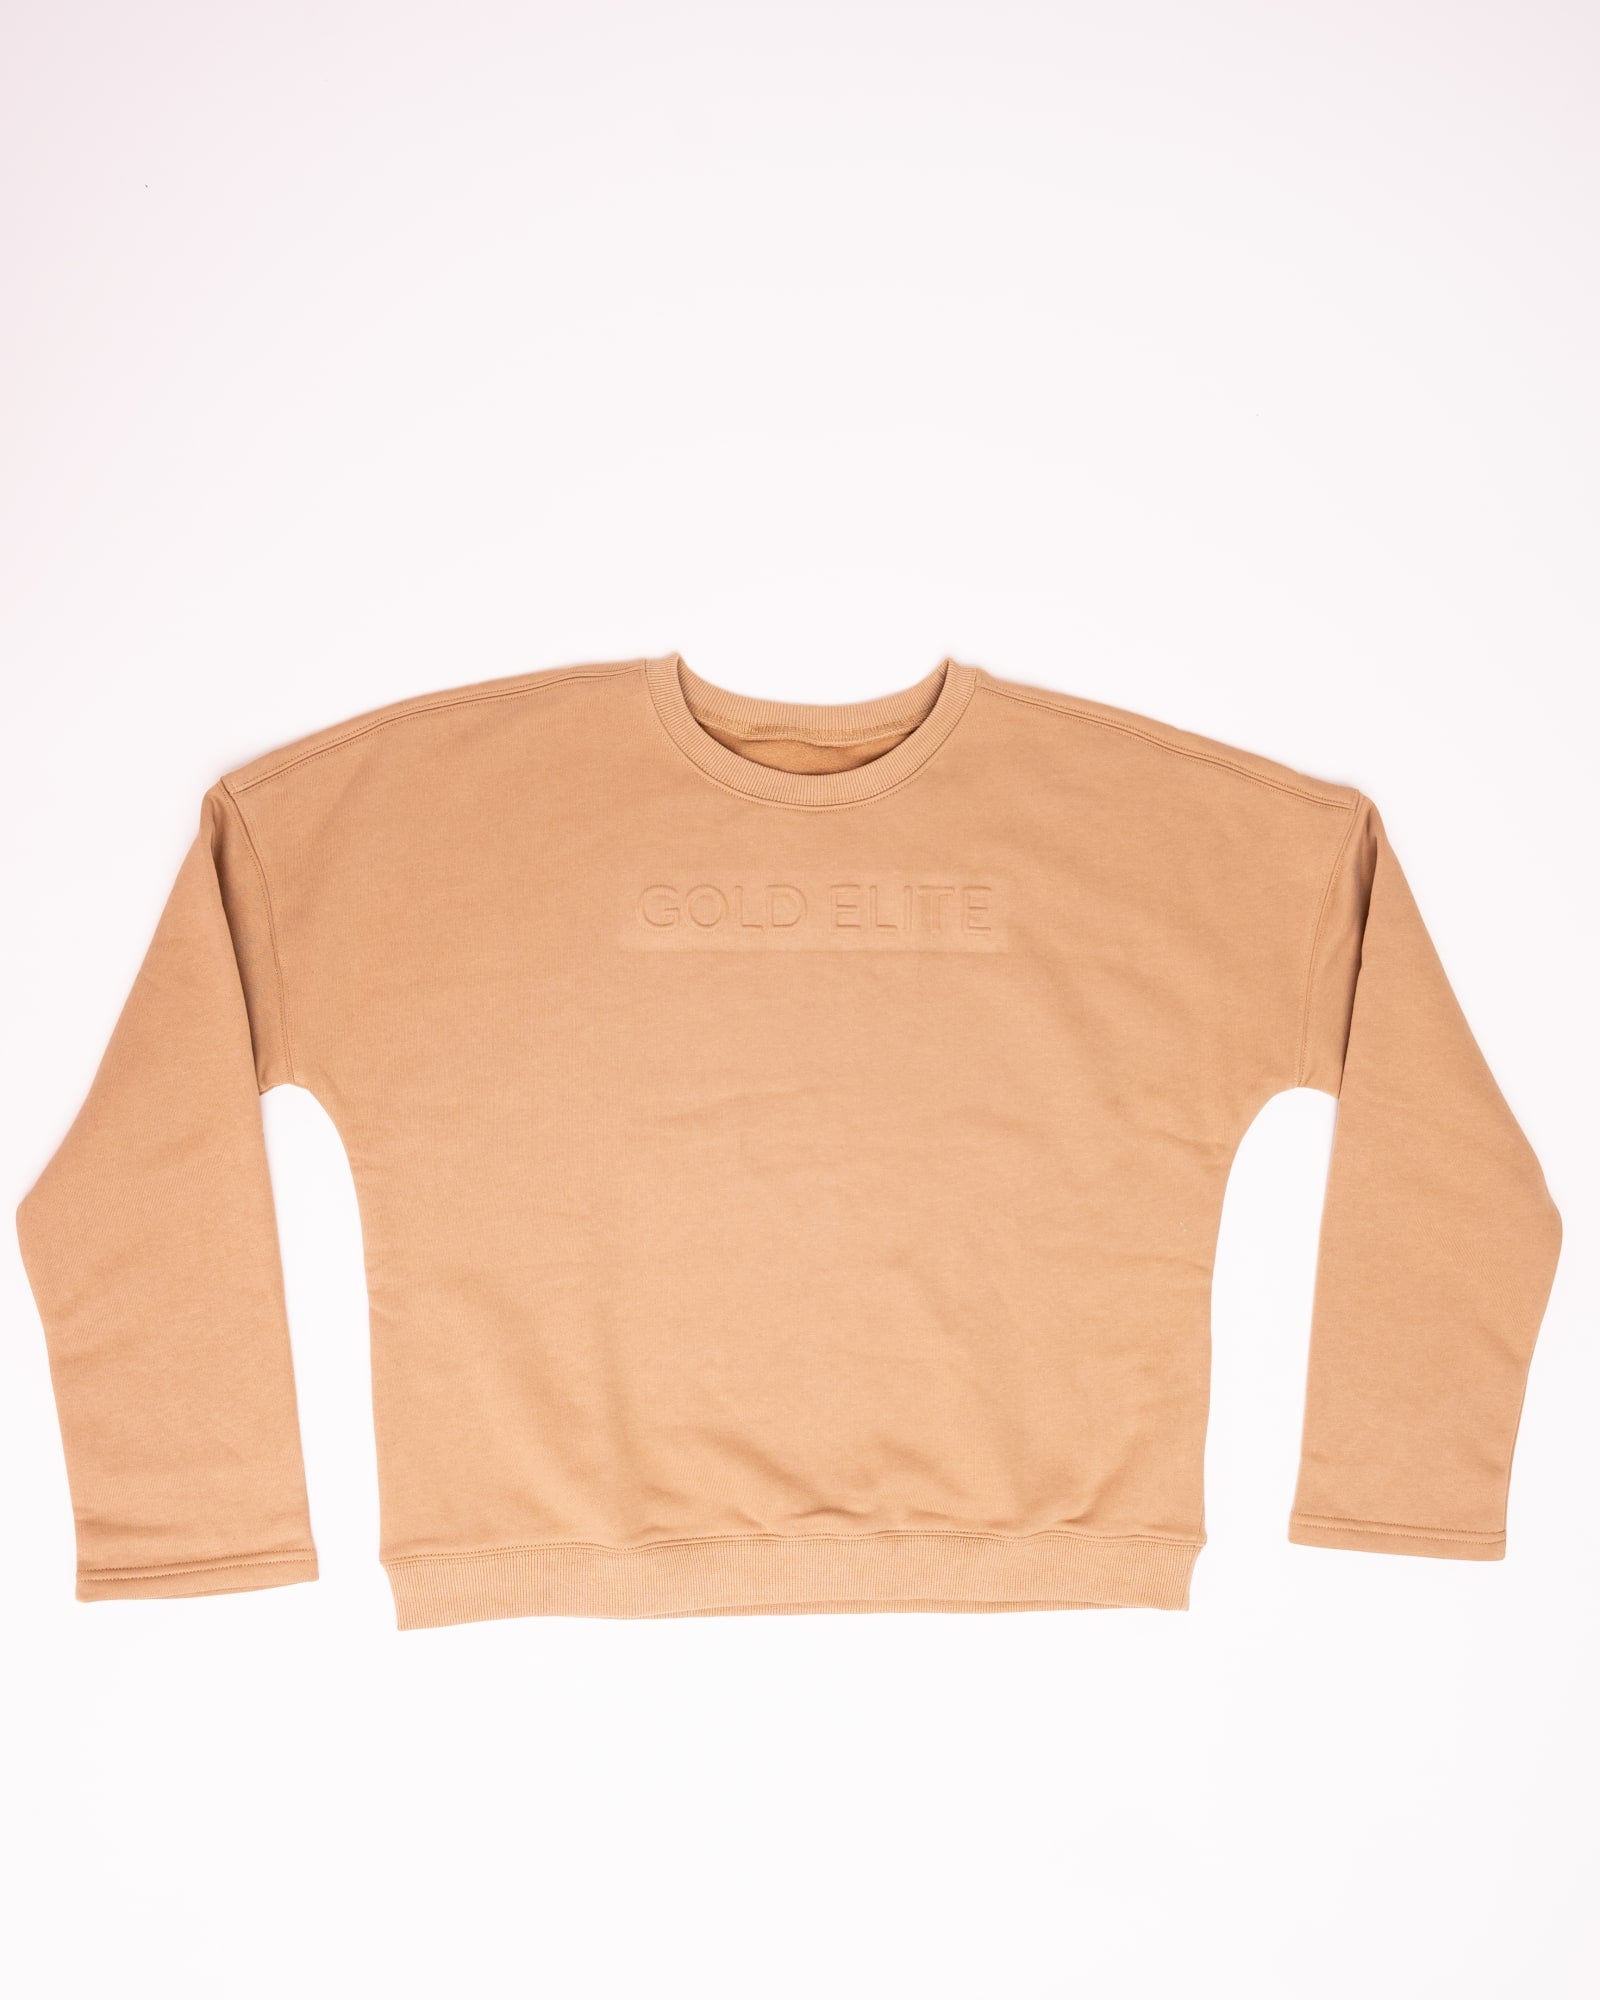 GOLD ELITE Crewneck Sweater | Desert Mist